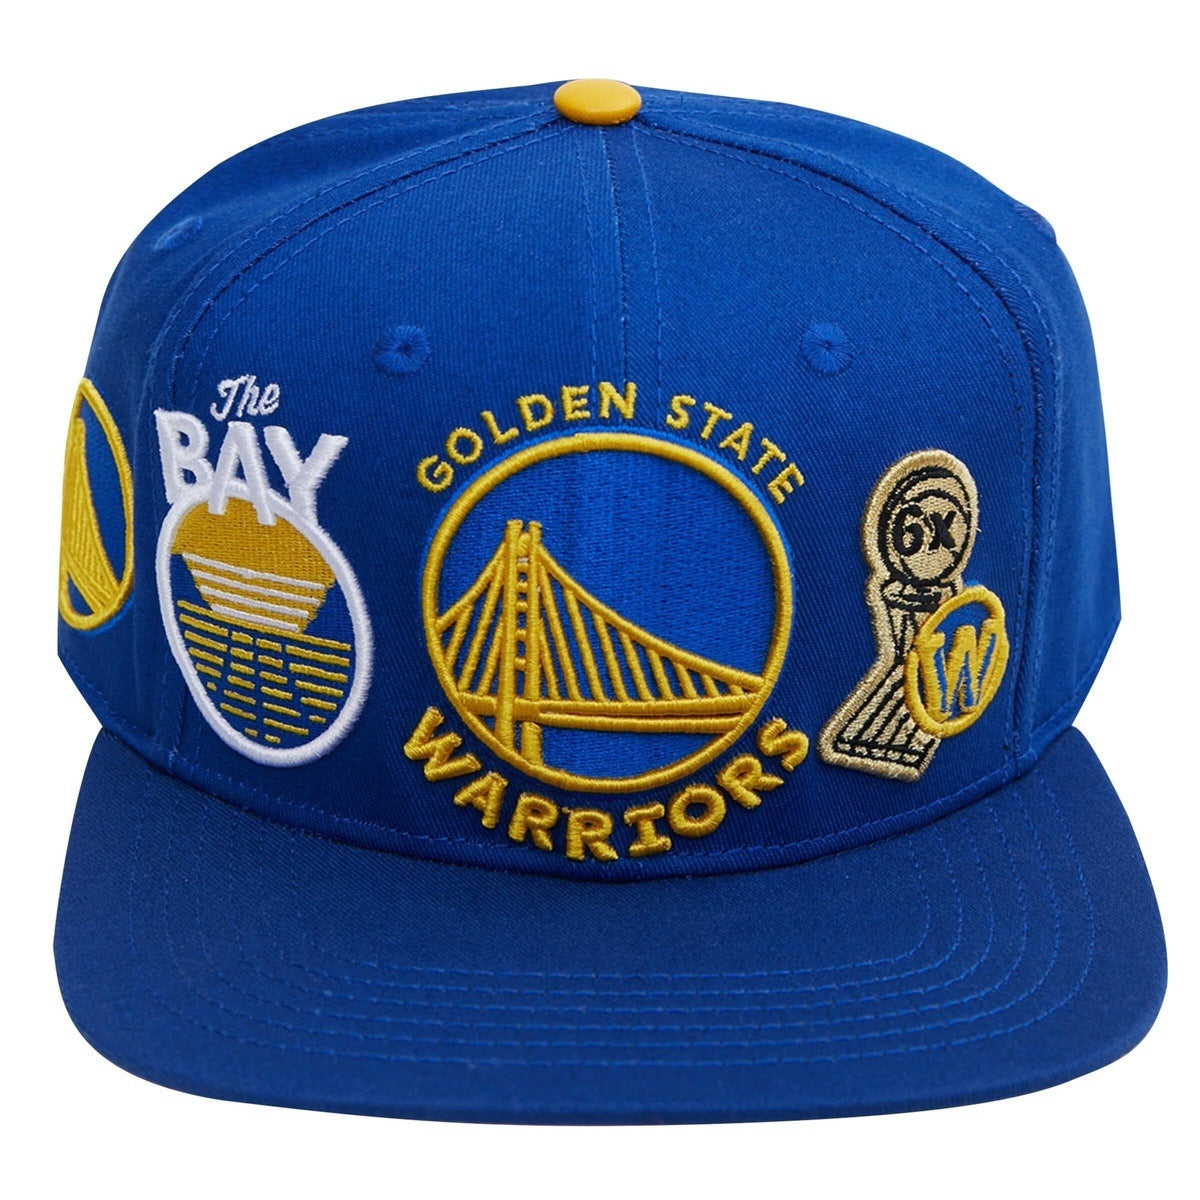 NBA GOLDEN STATE WARRIORS CITY DOUBLE FRONT LOGO UNISEX SNAPBACK HAT (ROYAL BLUE)